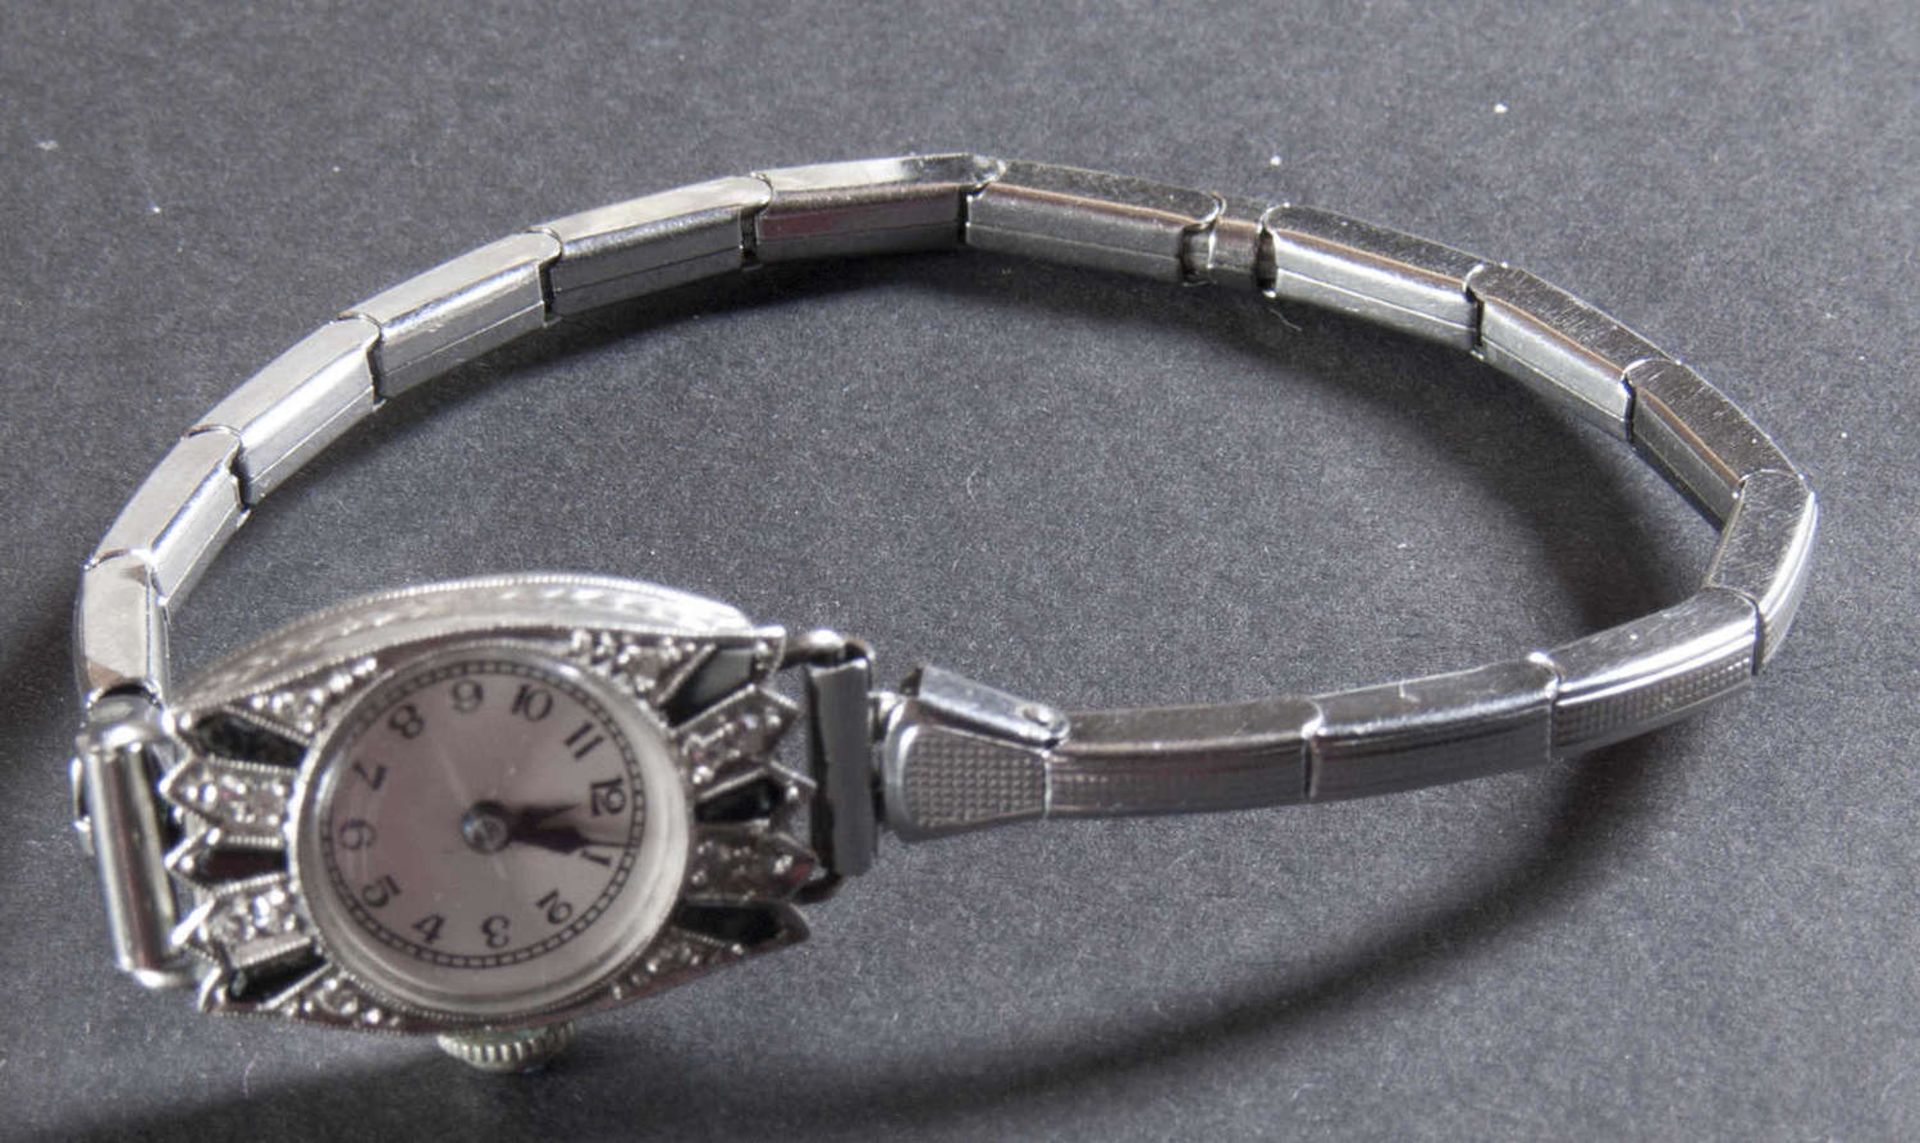 Art Deco - Armbanduhr, Mit Flex - Armband. Rückseitig gepunzt "Platina". Gehäuse mit kleinen